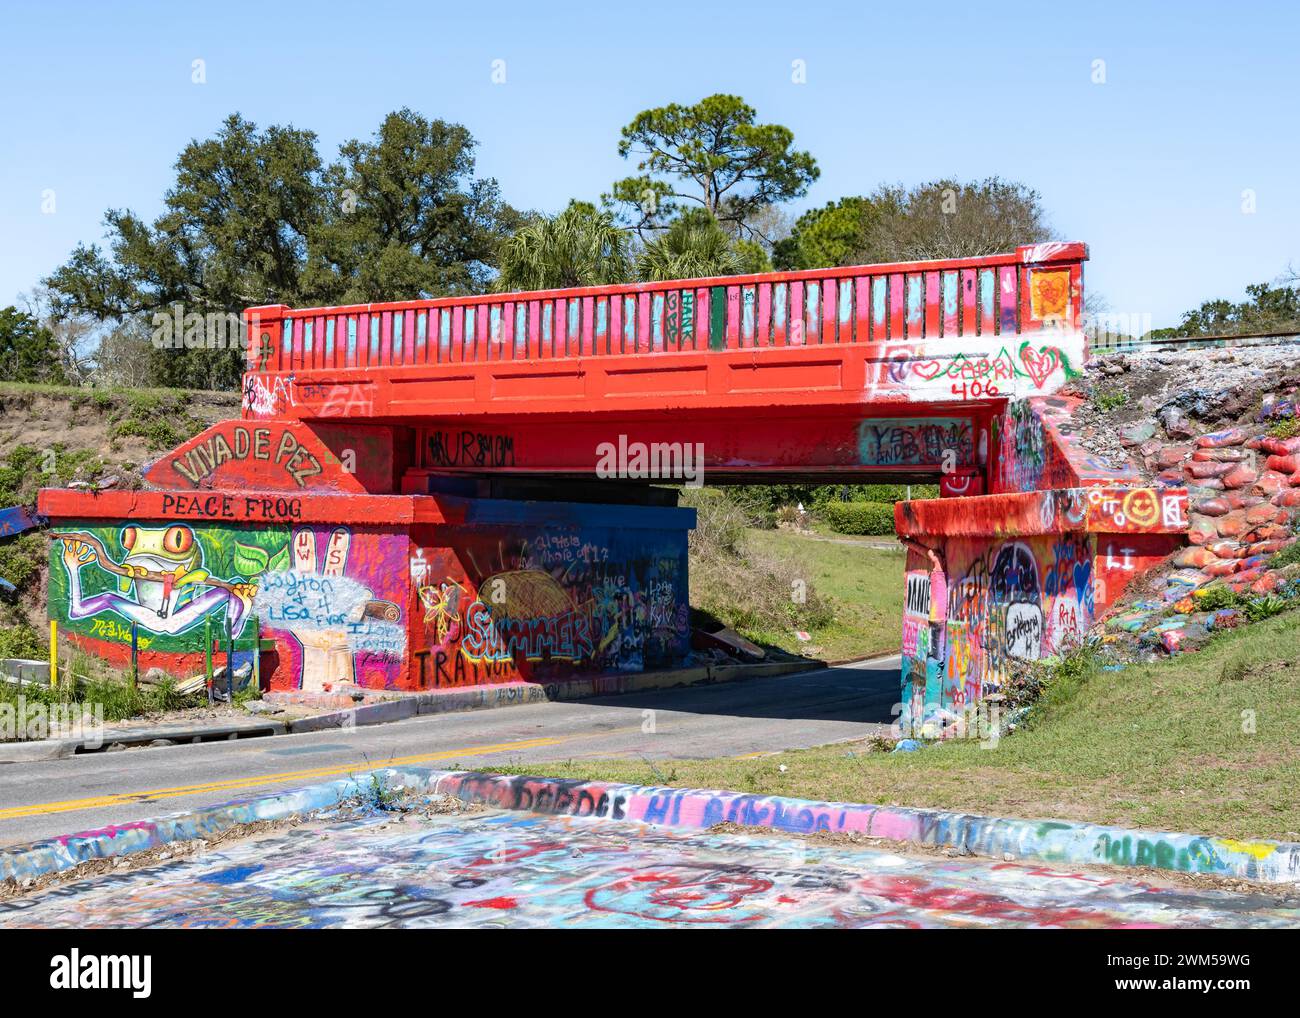 Farbenfrohe, beliebte Pensacola Graffiti Bridge (PGB), Pensacola, Florida. Stockfoto